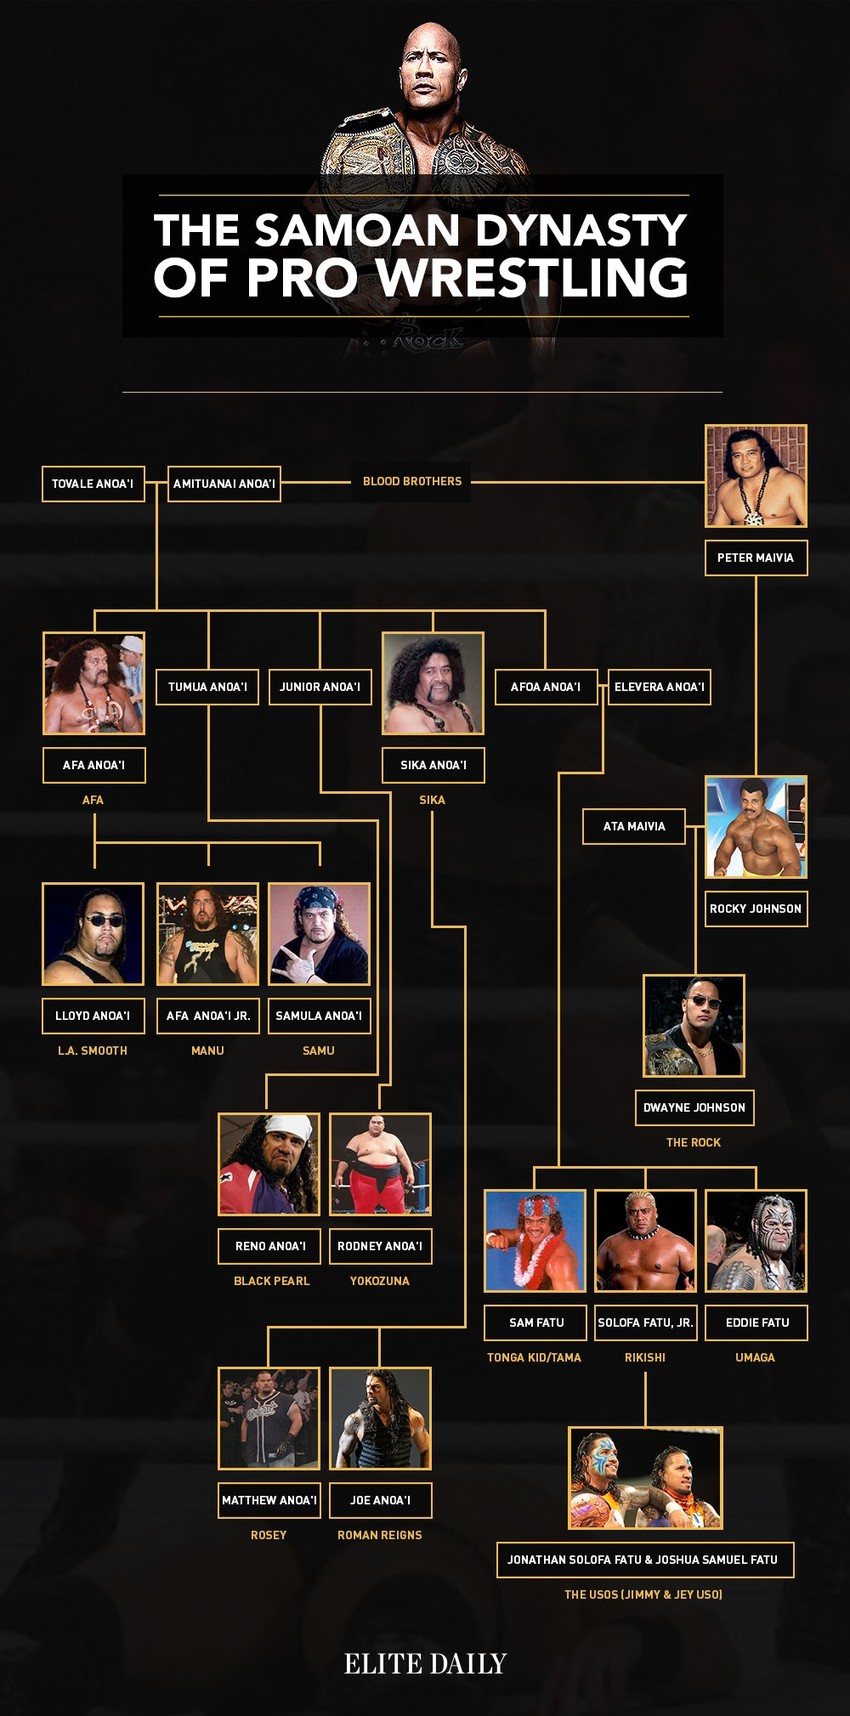 Anoa'i family wrestling dynasty